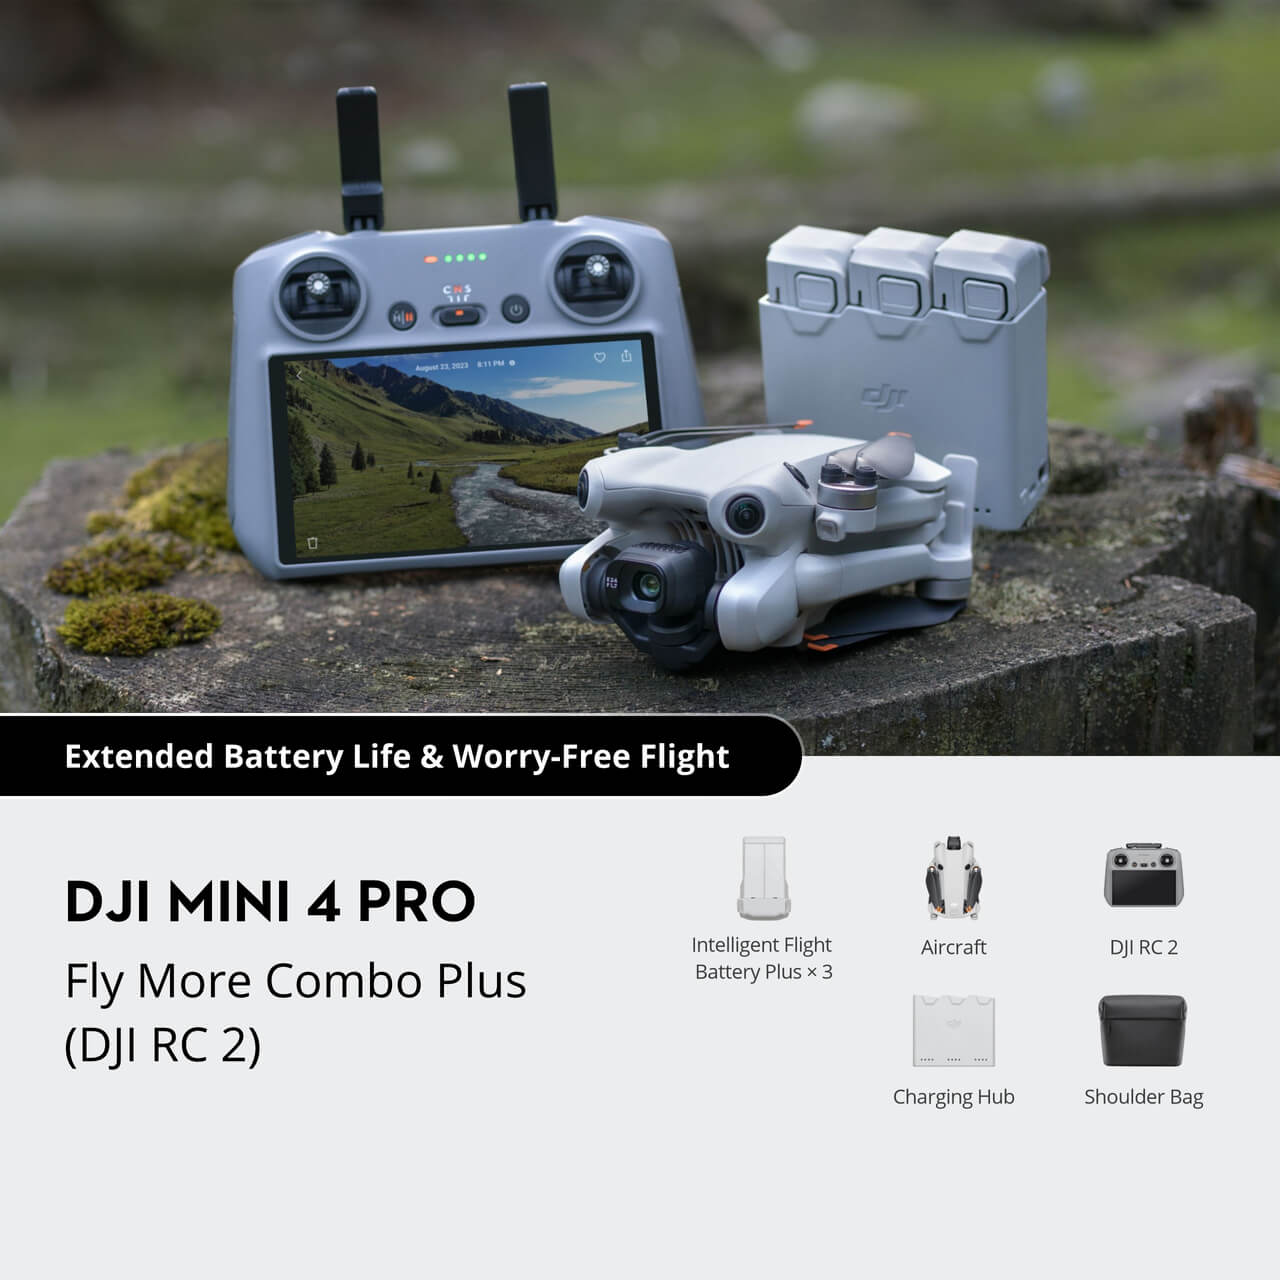 DJI Mini 3 PRO / Mini 3 pro (DJI RC) Drone True Vertical Shooting 4K/60fps  Video